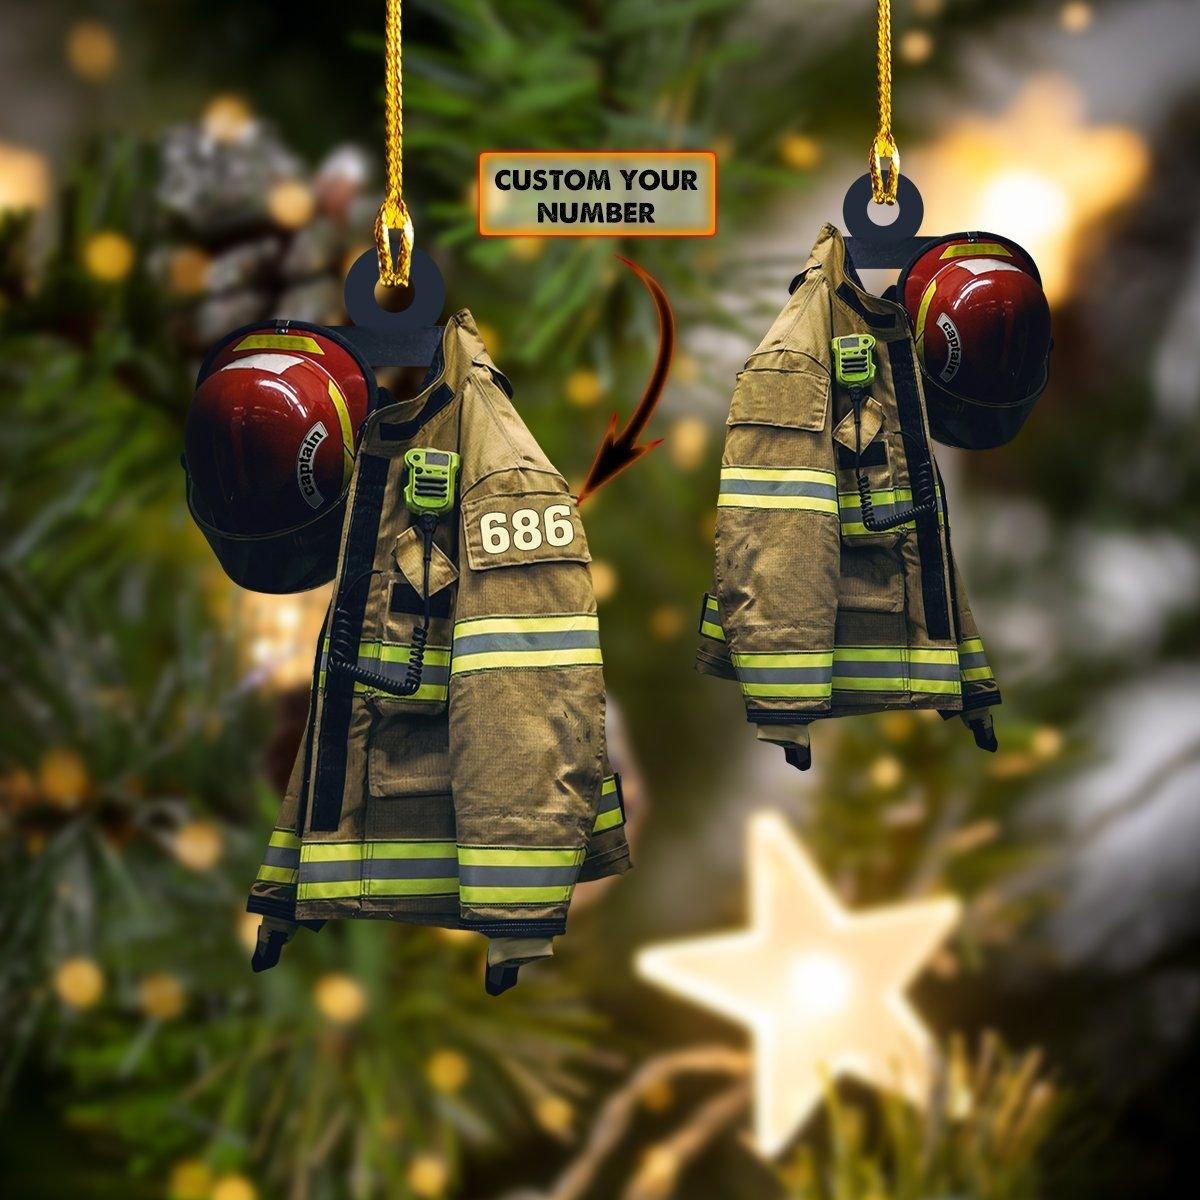 giftngon - Personalized Firefighter Captain RED HELMET | Christmas Custom Shaped Ornament | Custom Number